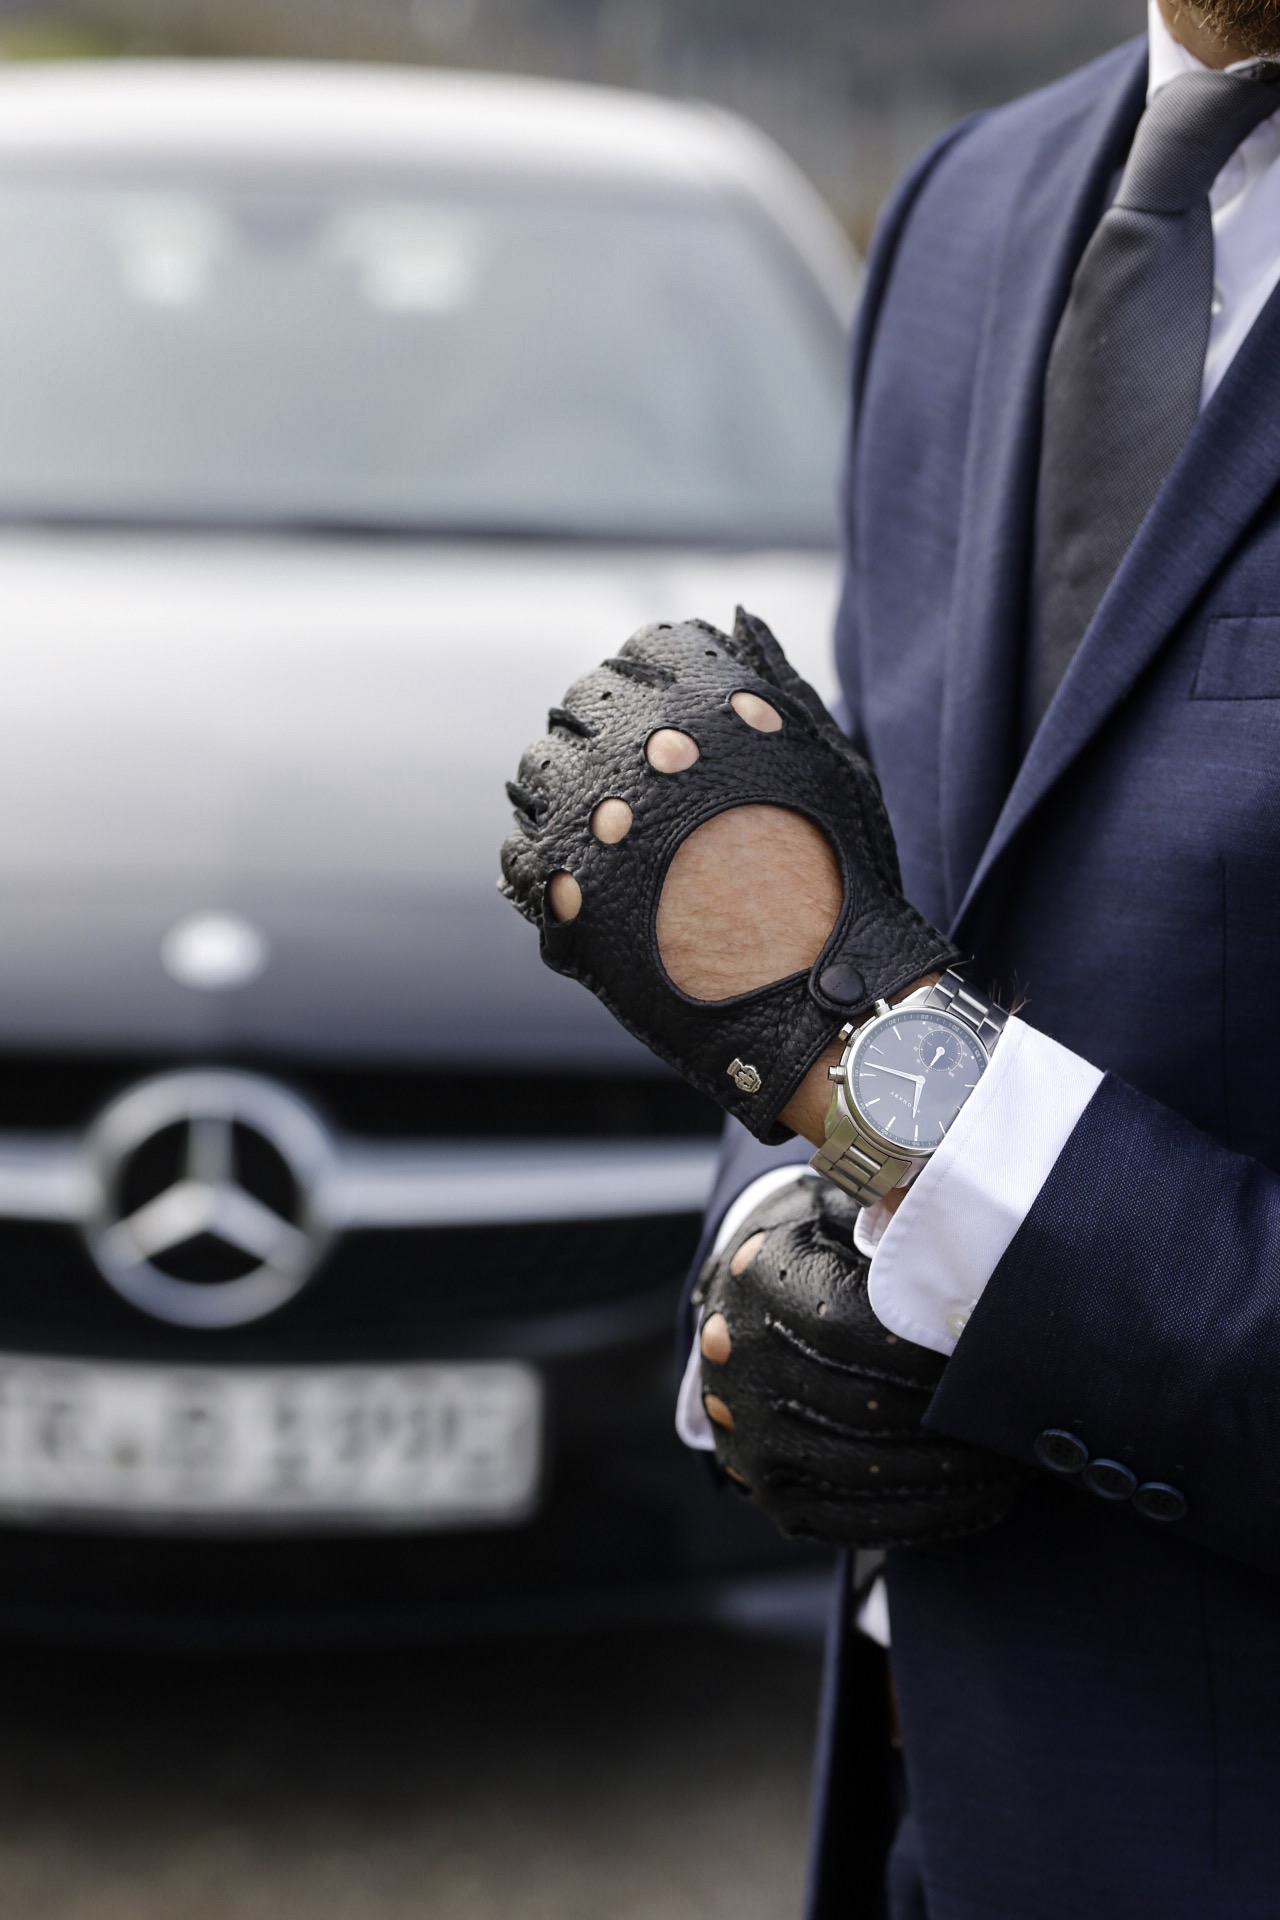 Autohandschuhe Herren Lederhandschuhe Autofahrer häkeln Fashion 2017 Modell